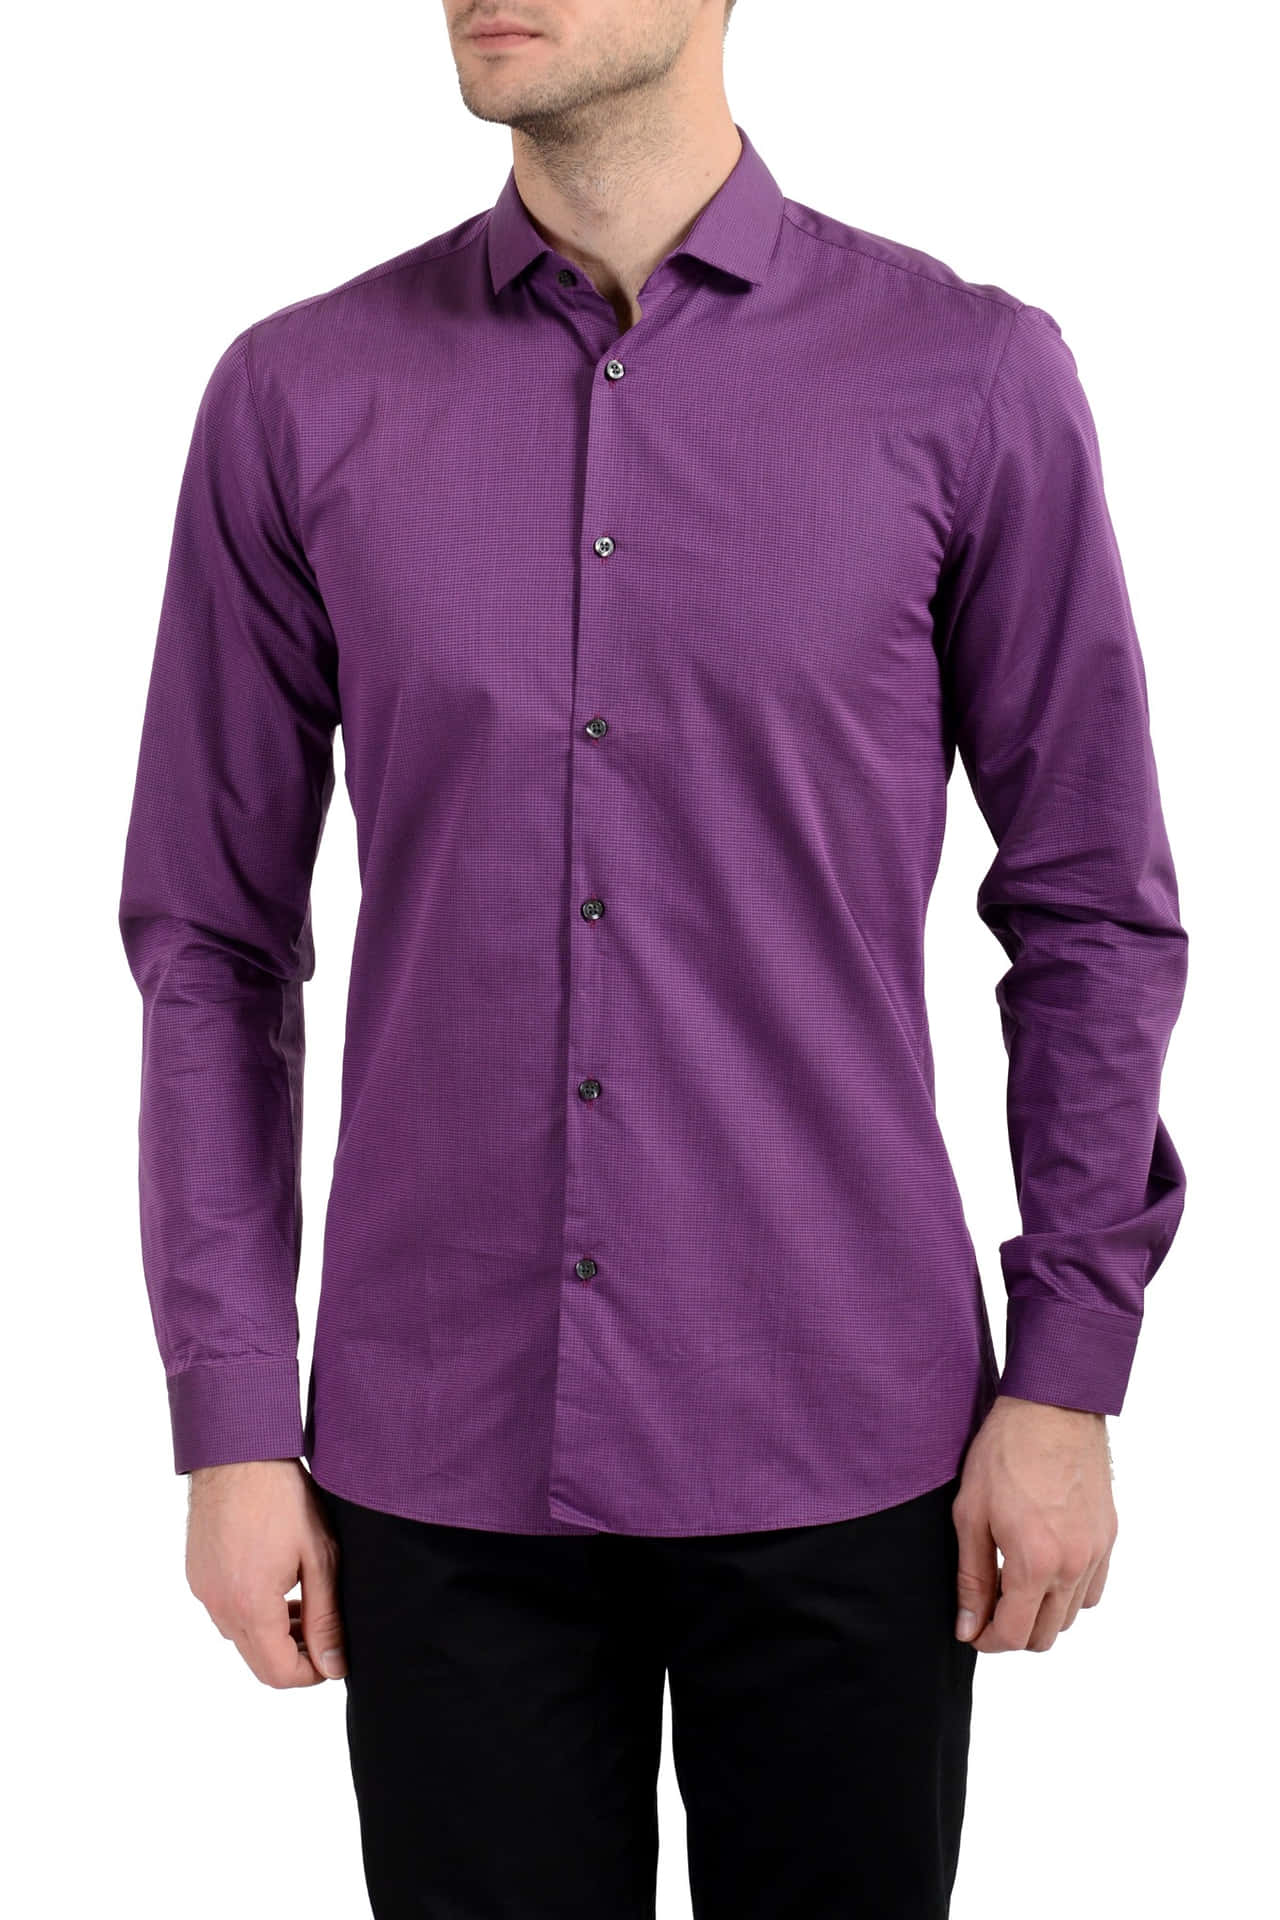 Look Fresh in This Purple Shirt Wallpaper